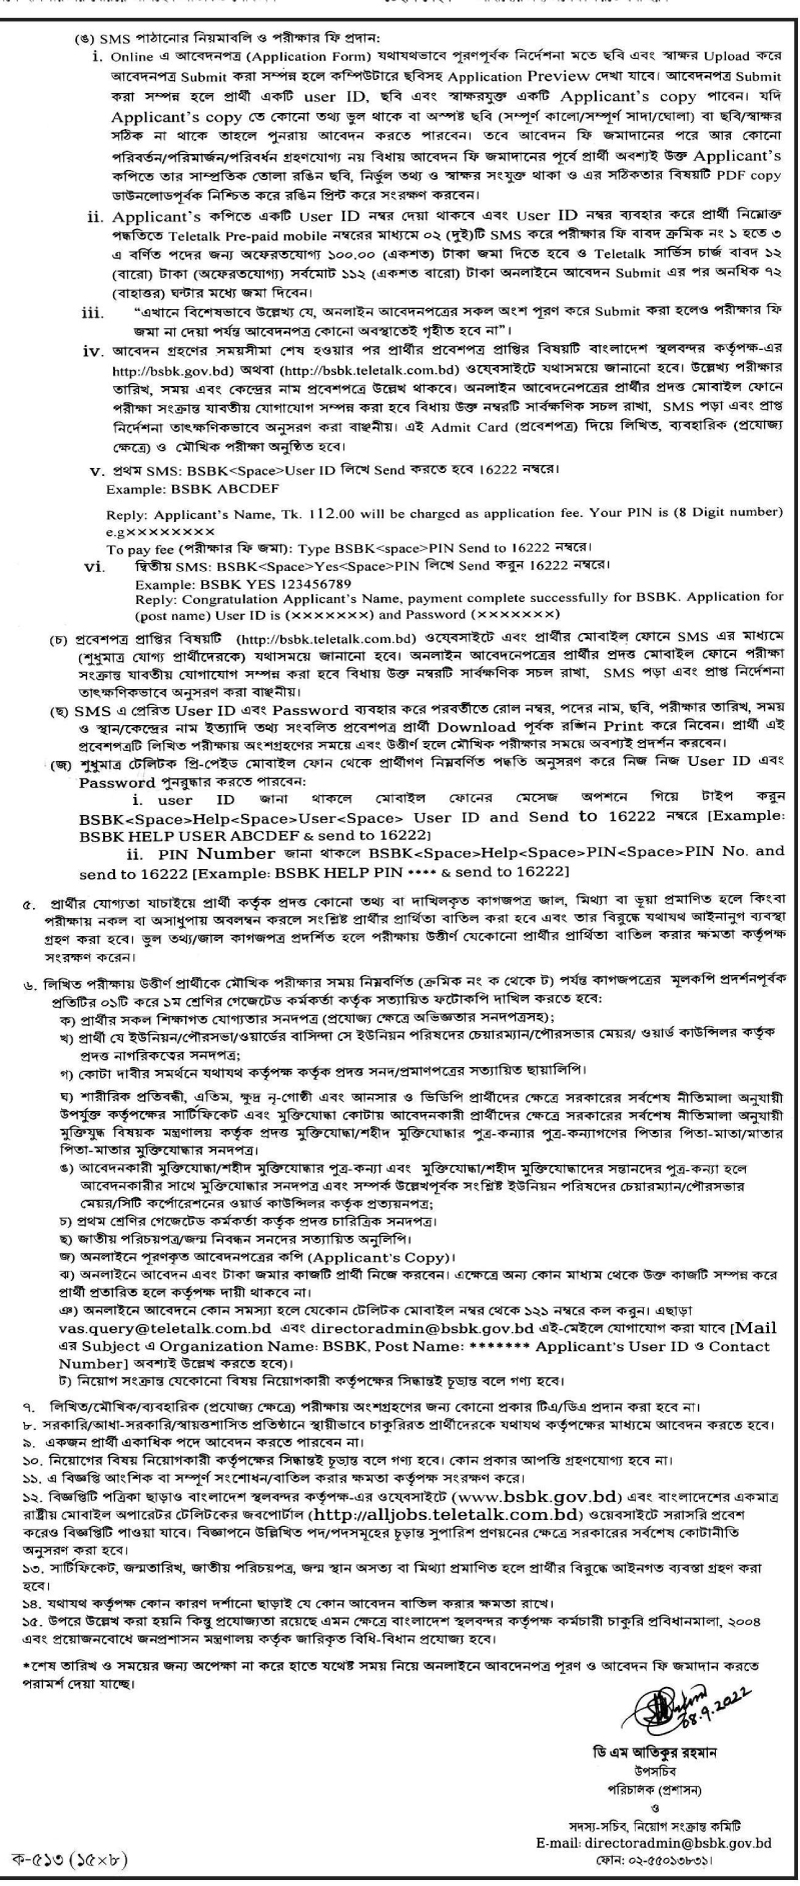 BLPA  govt Job Circular 2022- blri.teletalk.com.bd Apply